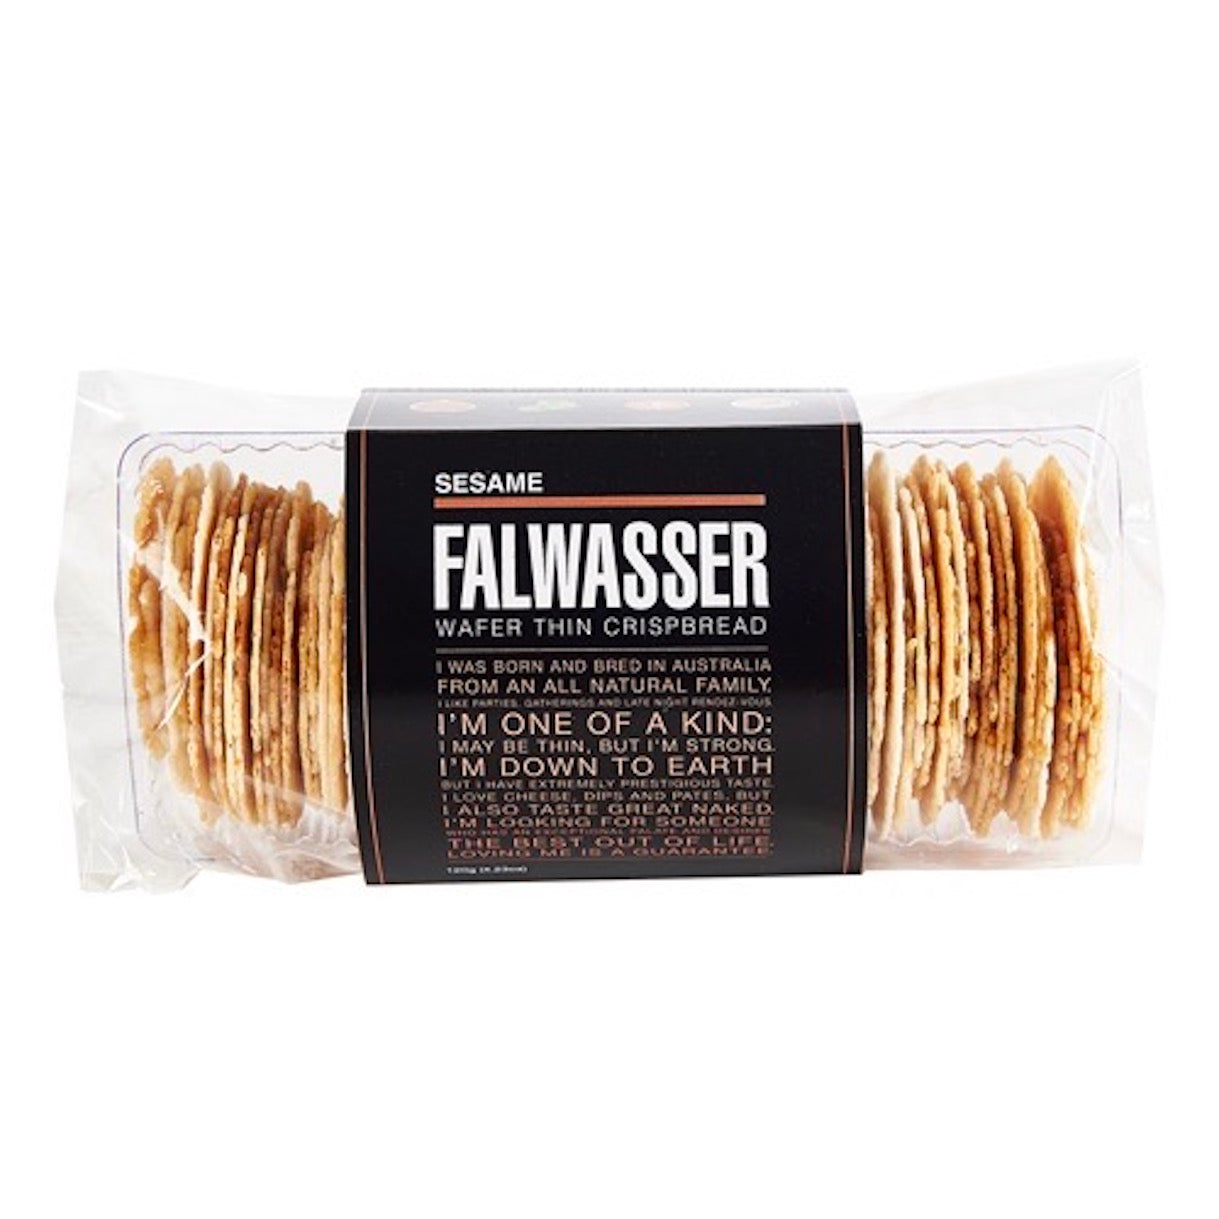 falwasser-crispbread-sesame-australia-online-grocery-delivery-singapore-thenewgrocer